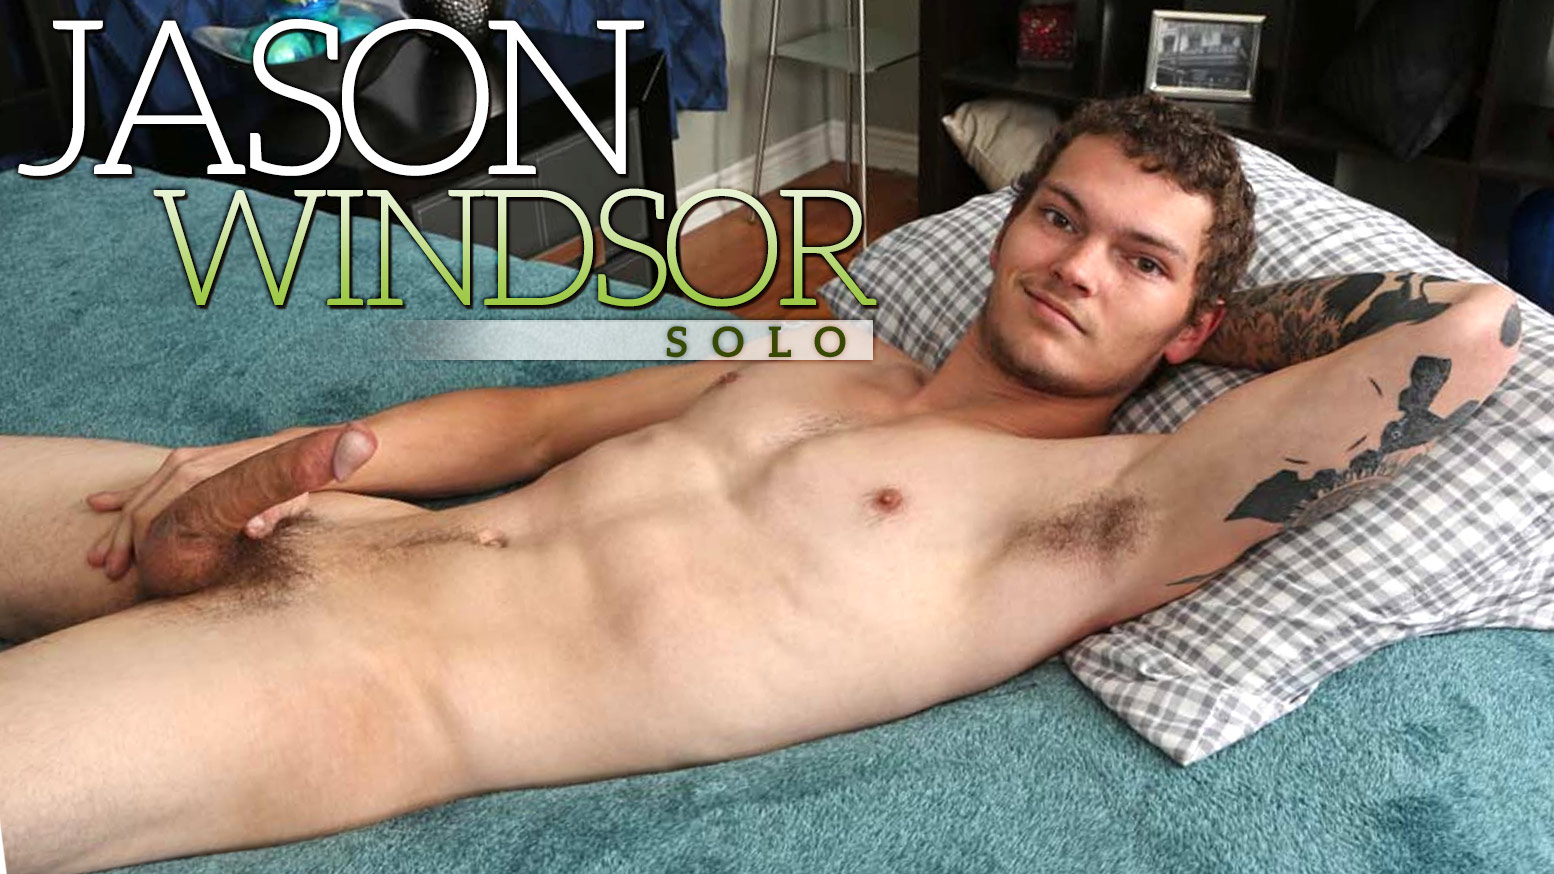 Jason Windsor nude photos